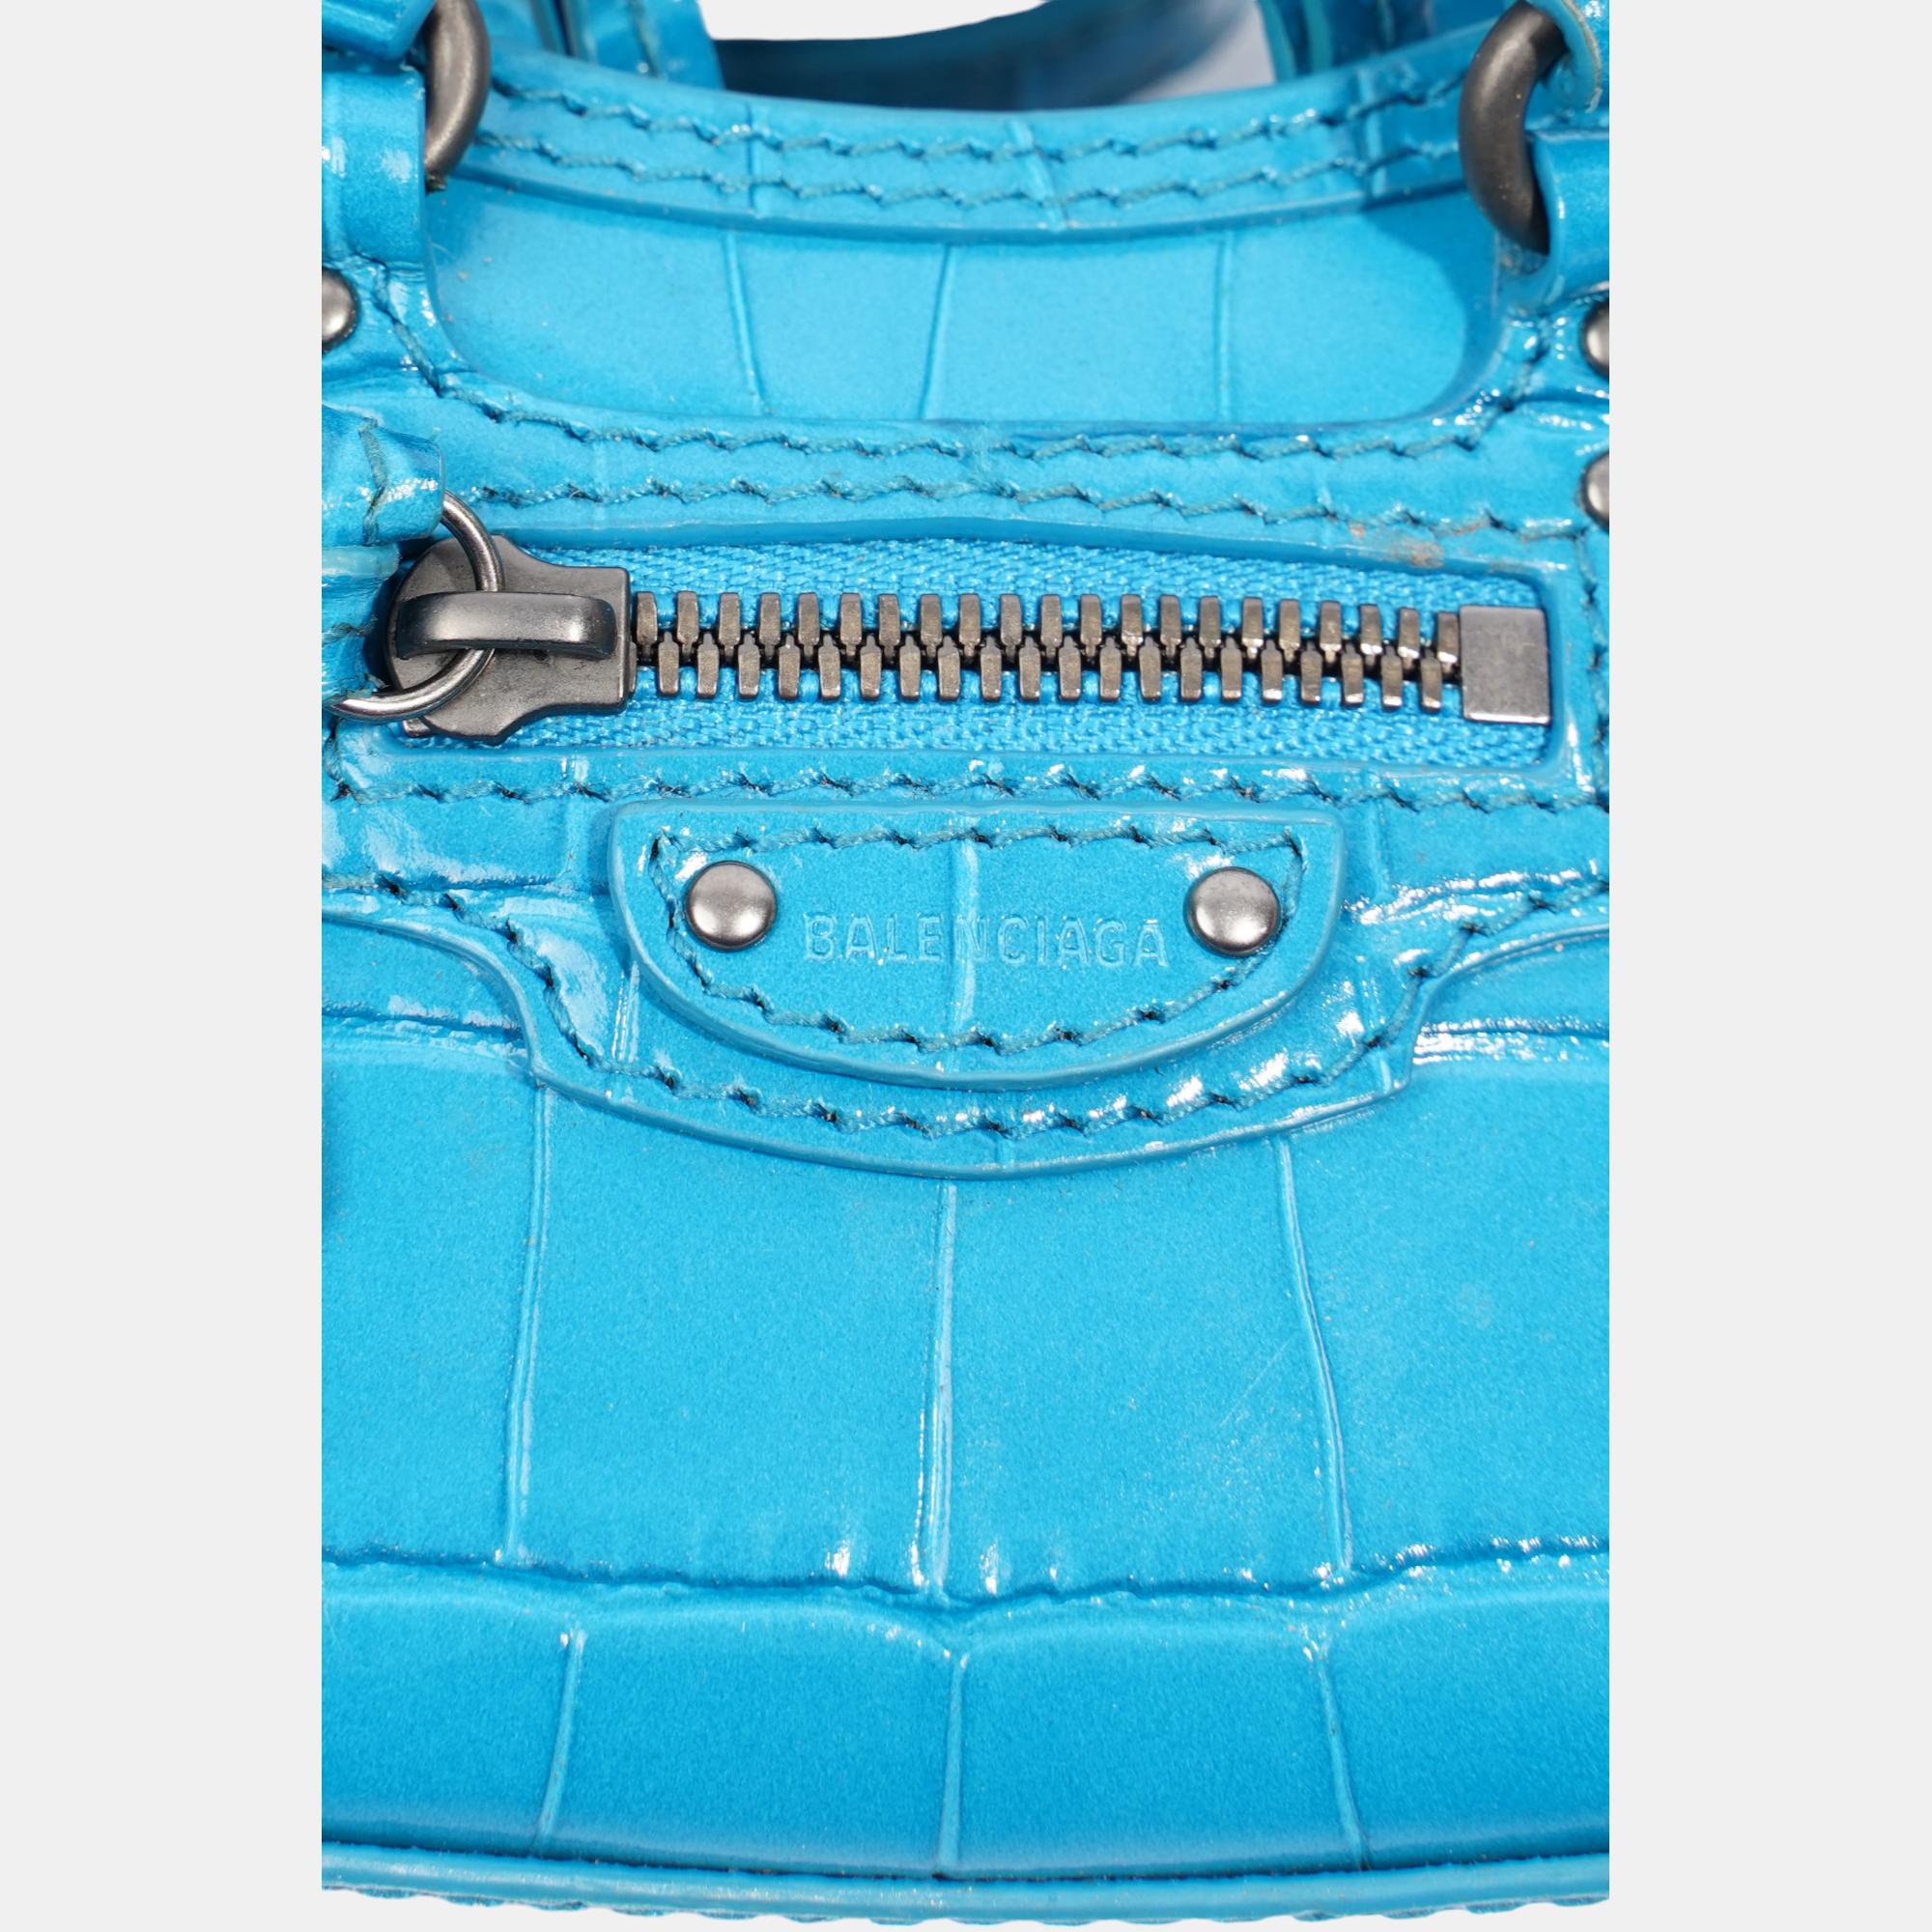 Balenciaga City Bag Blue Embossed Leather Nano